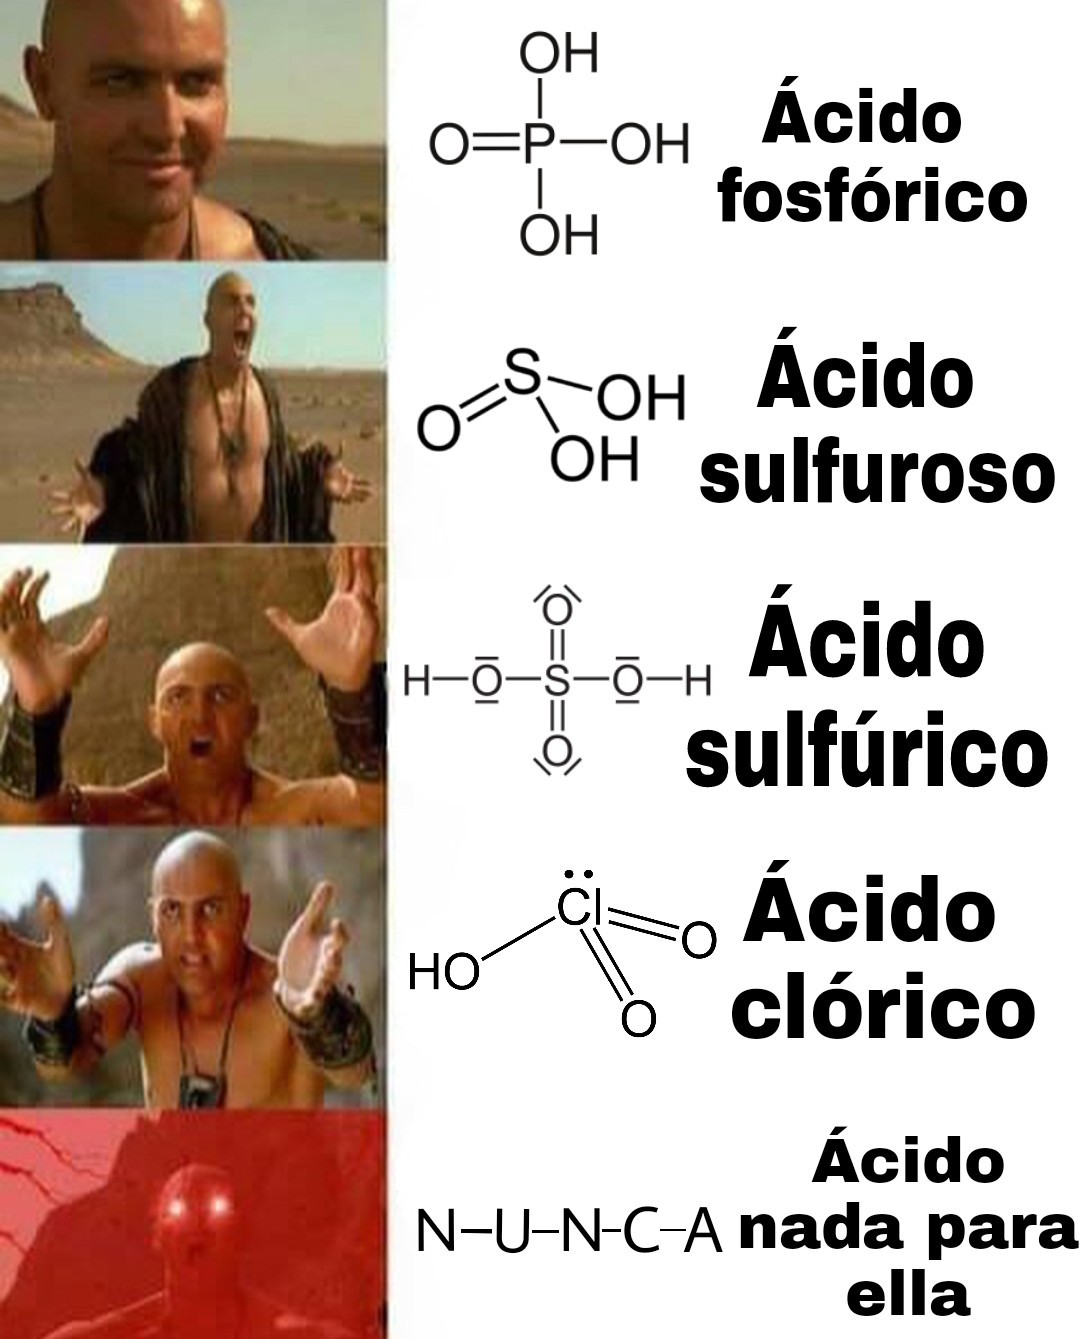 Clases de quimica con @memesteleco